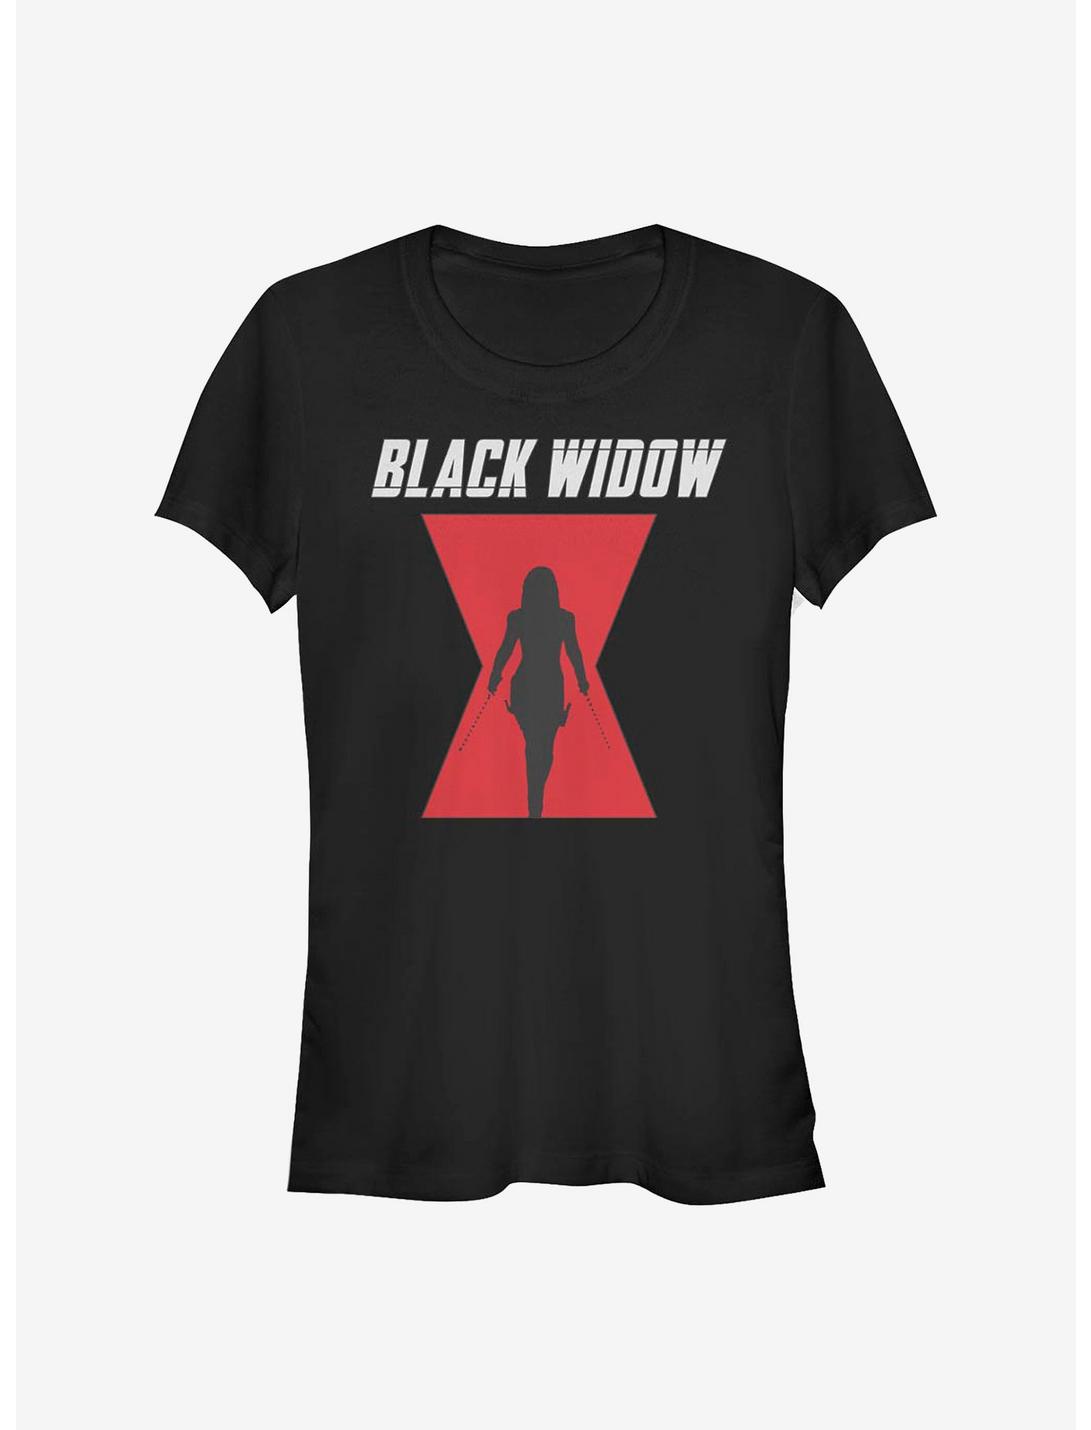 Marvel Black Widow Logo Girls T-Shirt, BLACK, hi-res